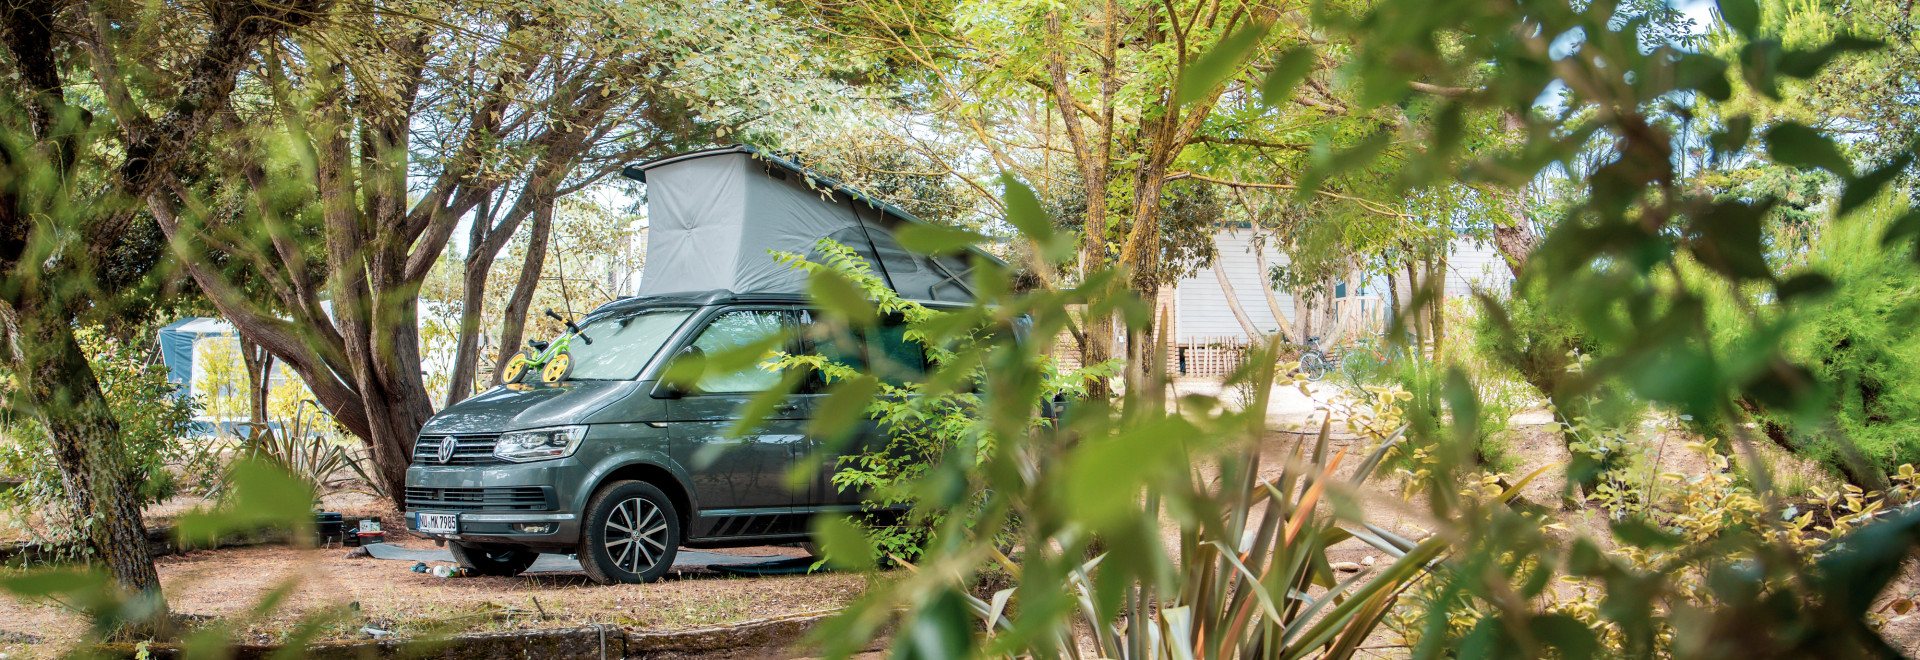 Emplacement van tente camping car avec sanitaires individuels